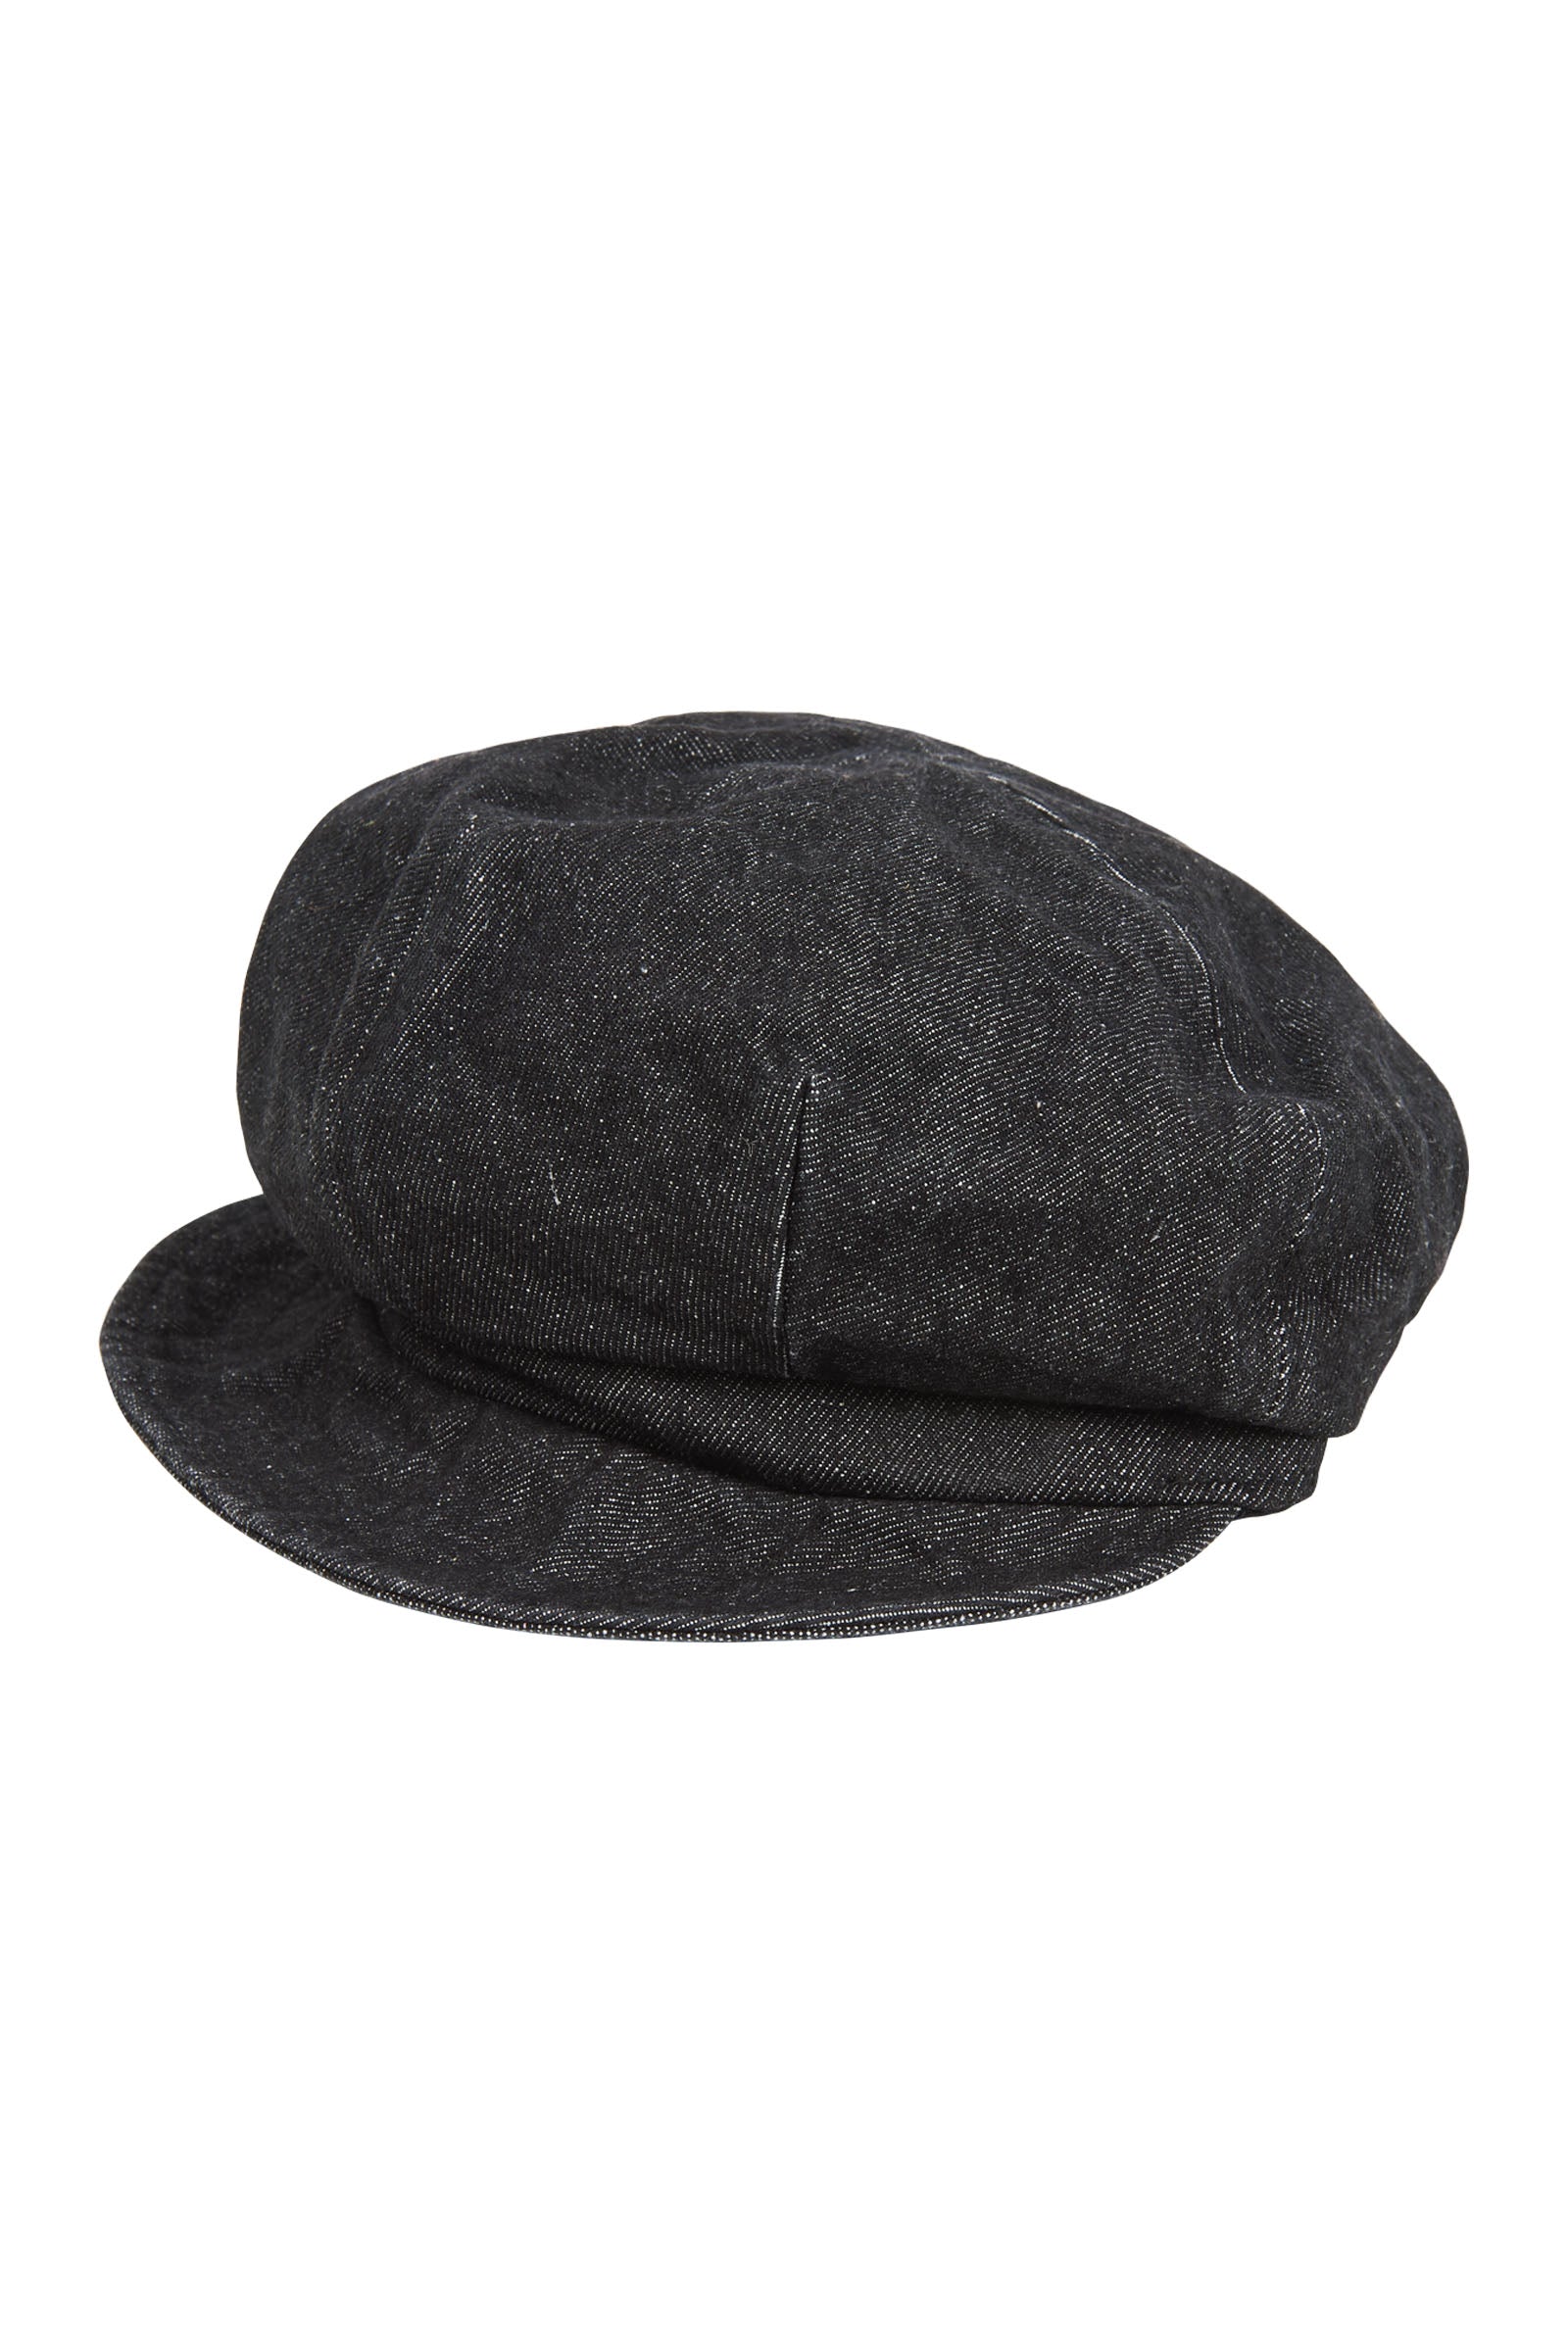 Urban Cap -  Ash - Isle of Mine Hat